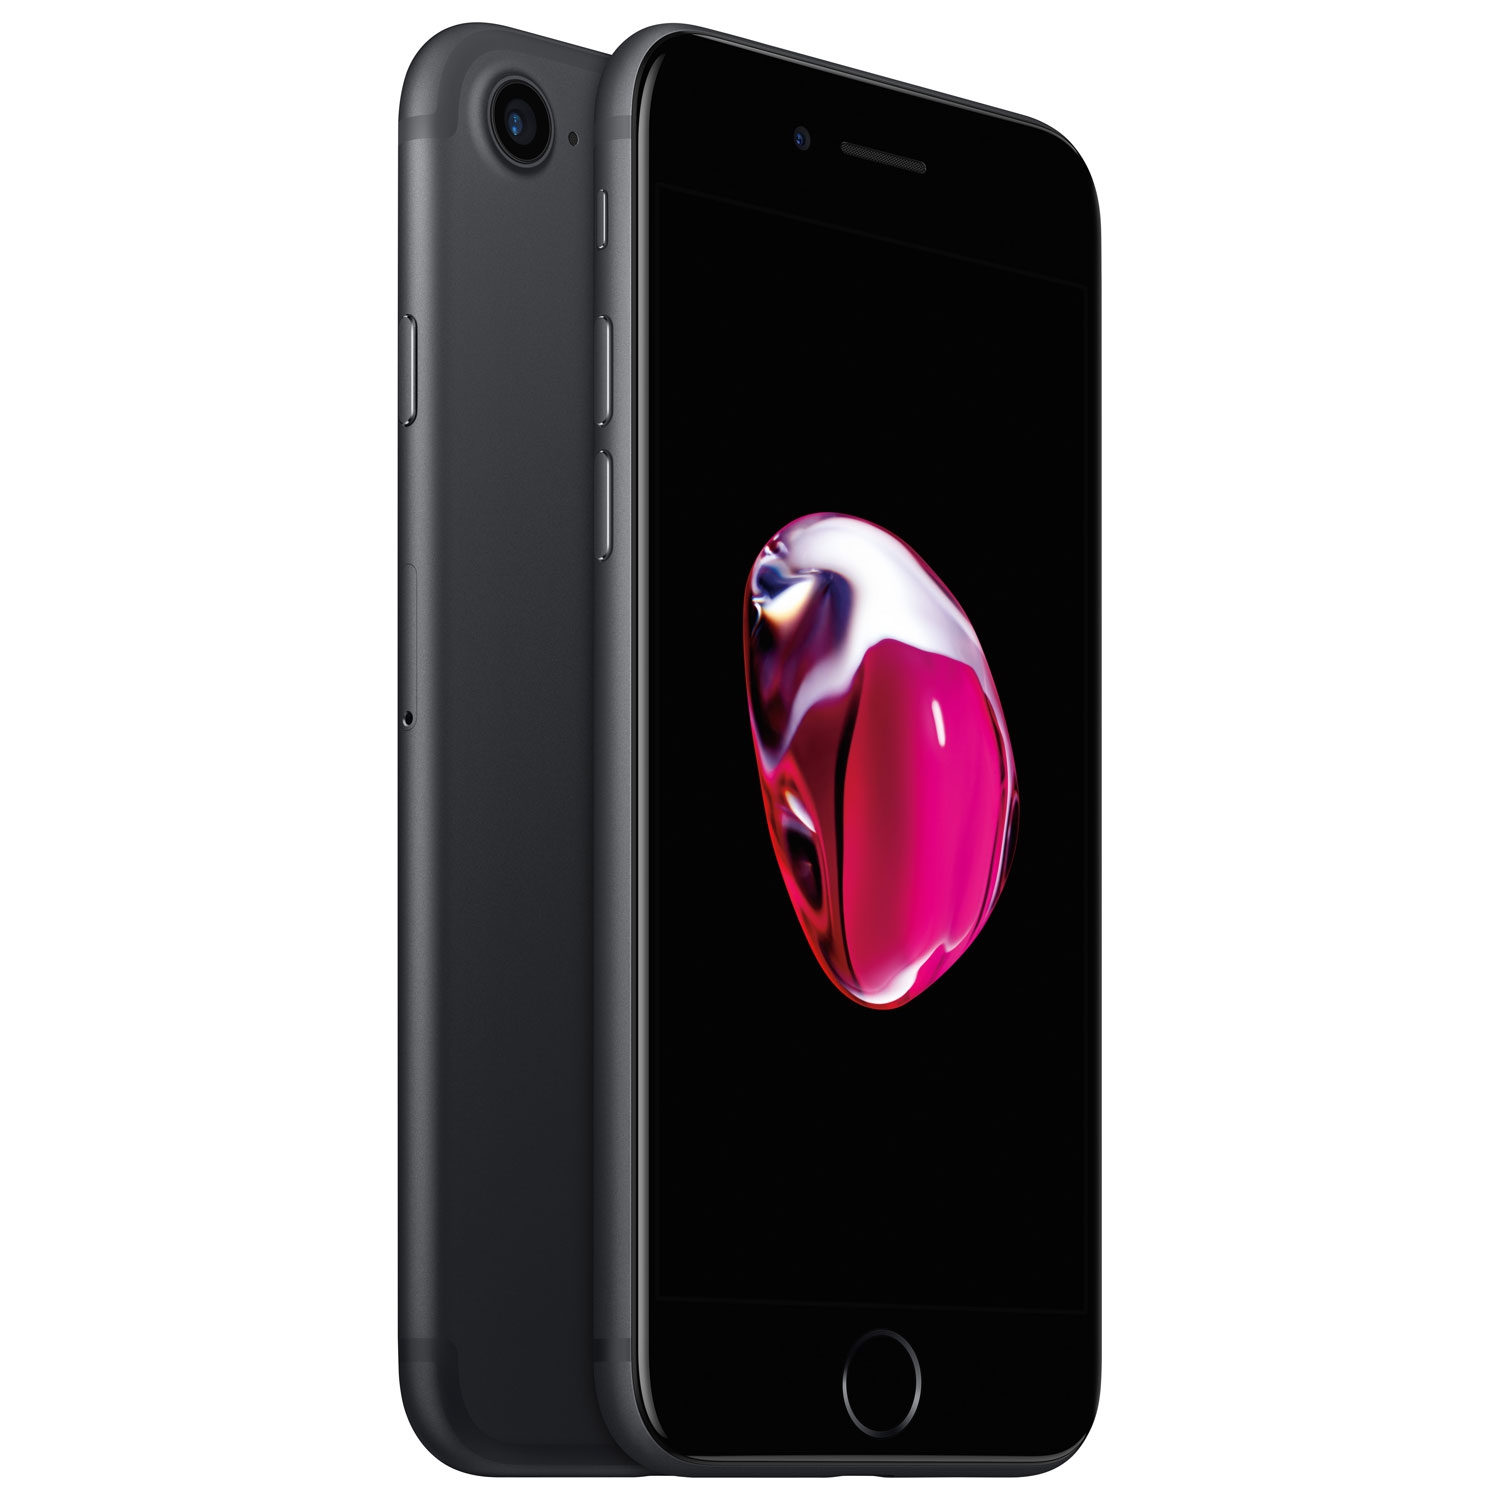 Refurbished (Good) - Apple iPhone 7 256GB Smartphone - Black - Unlocked